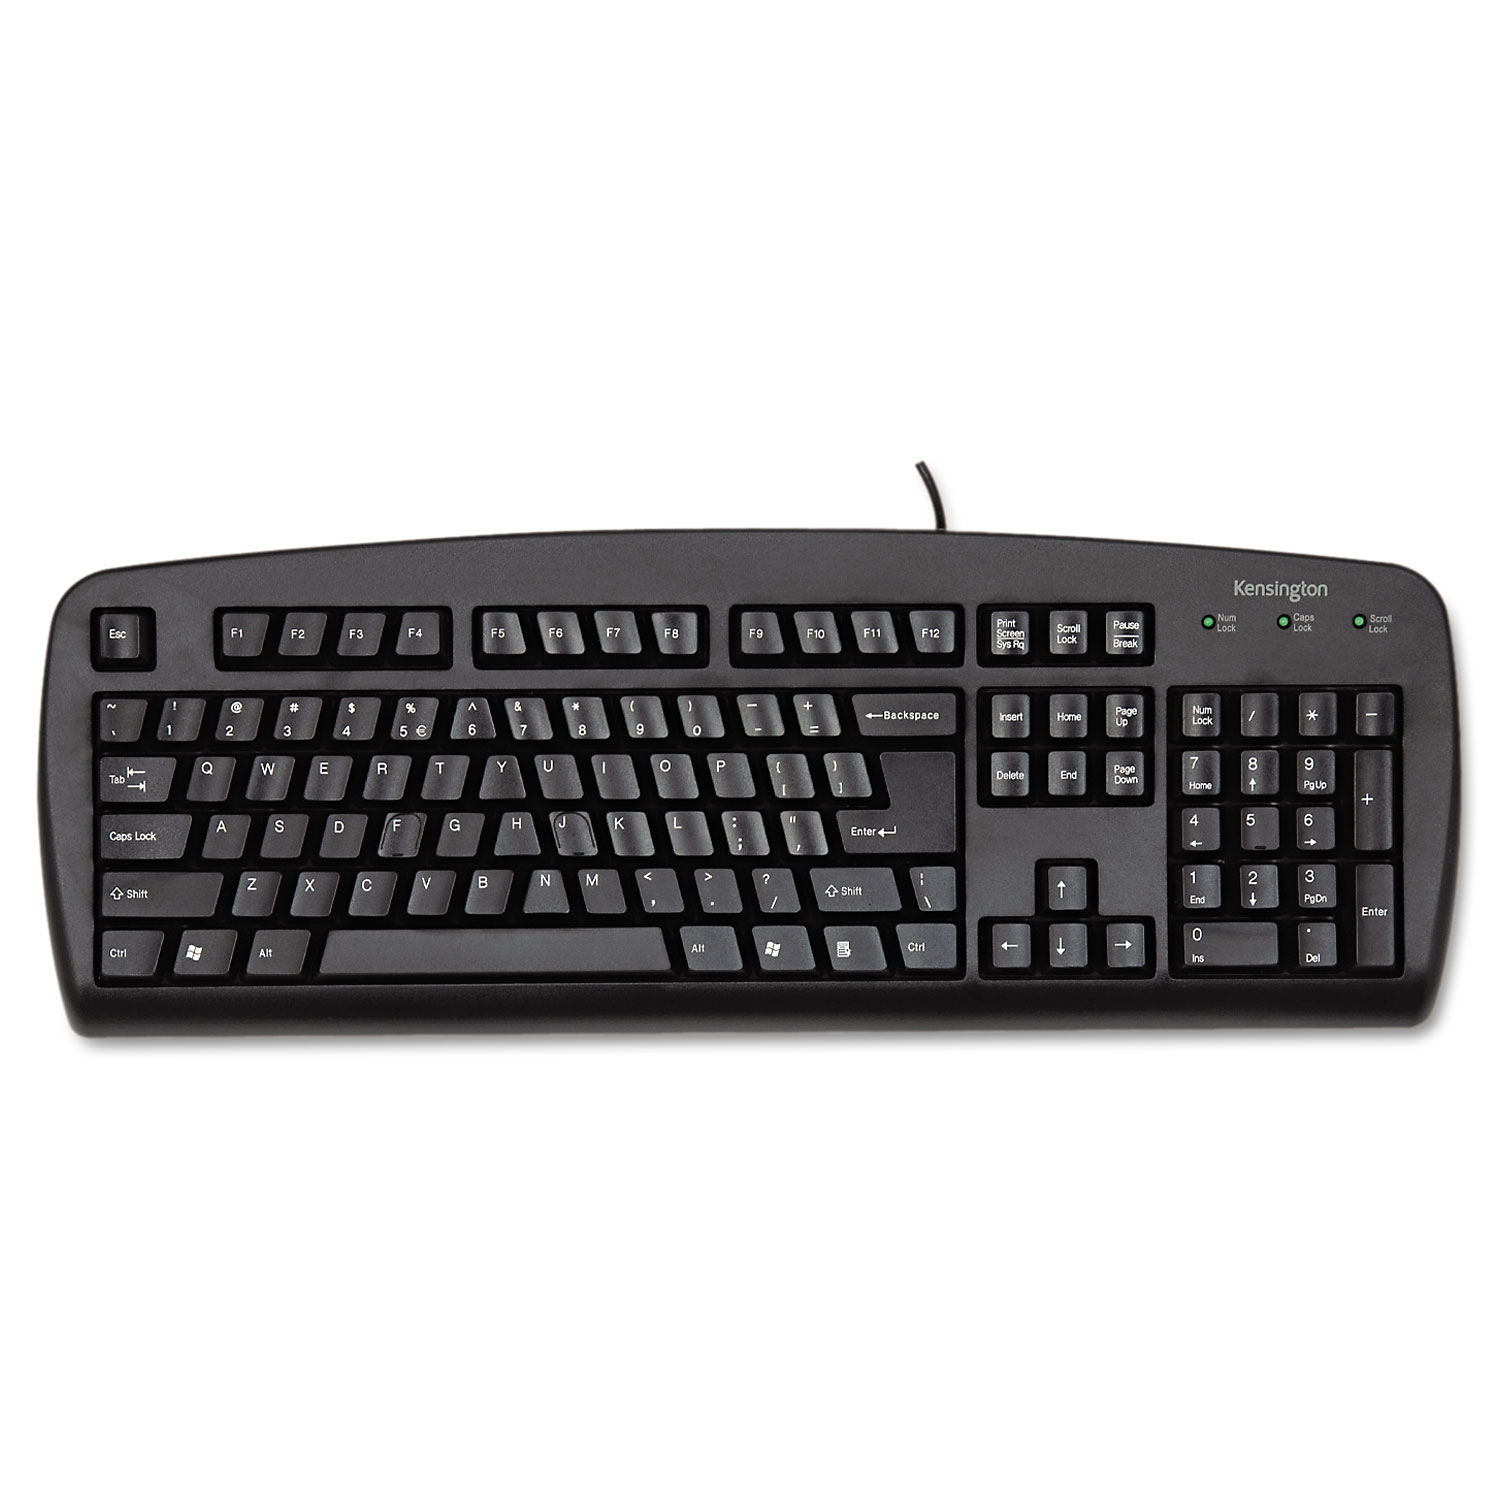  Kensington K64338US Comfort Type USB Keyboard, 104 Keys, Black (KMW64338) 